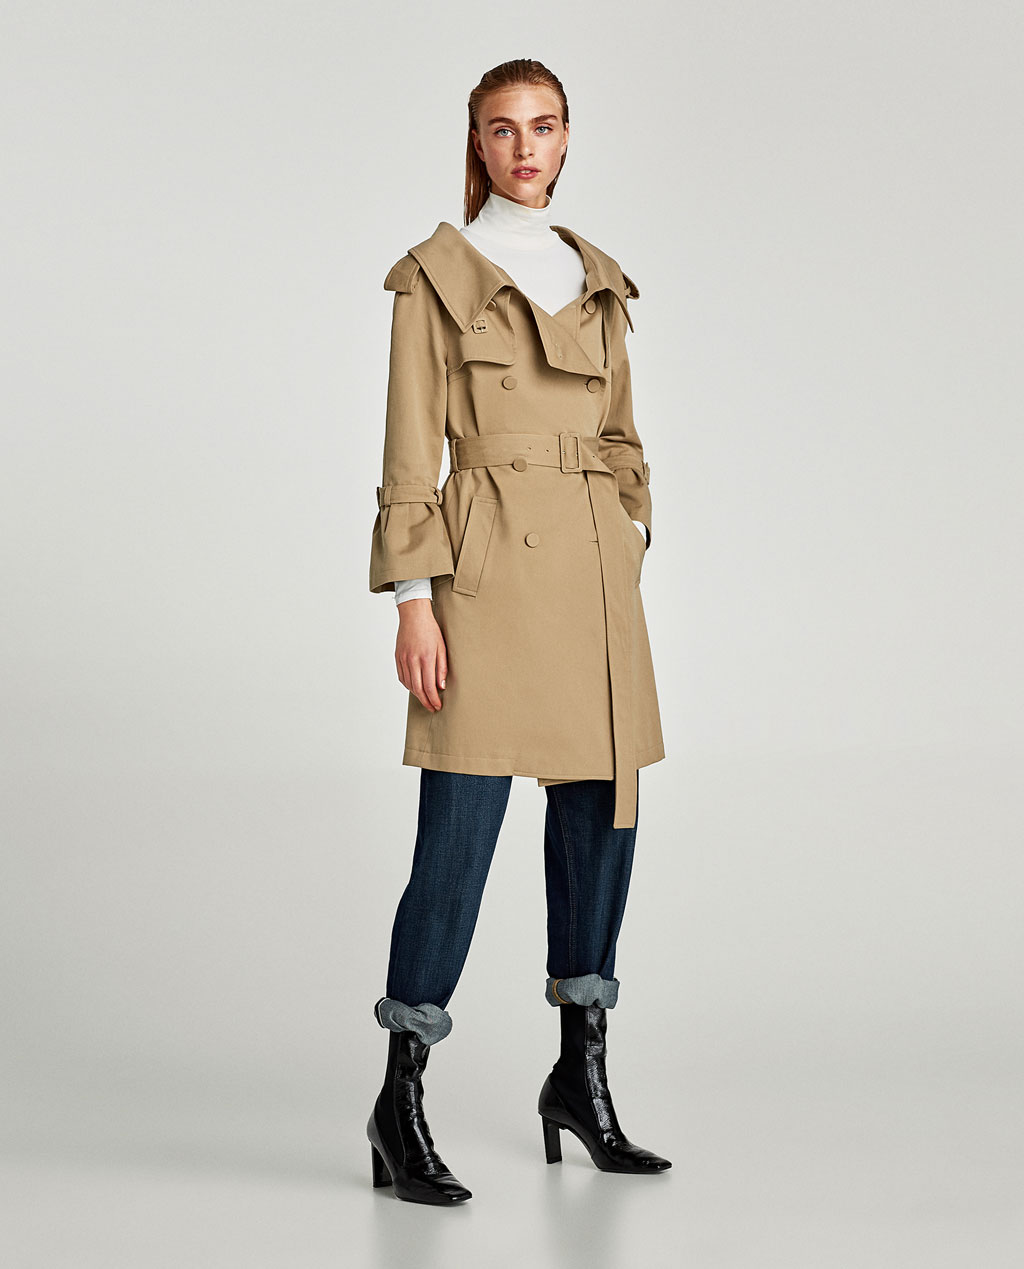 Zara Trench Coat with Oversized Collar